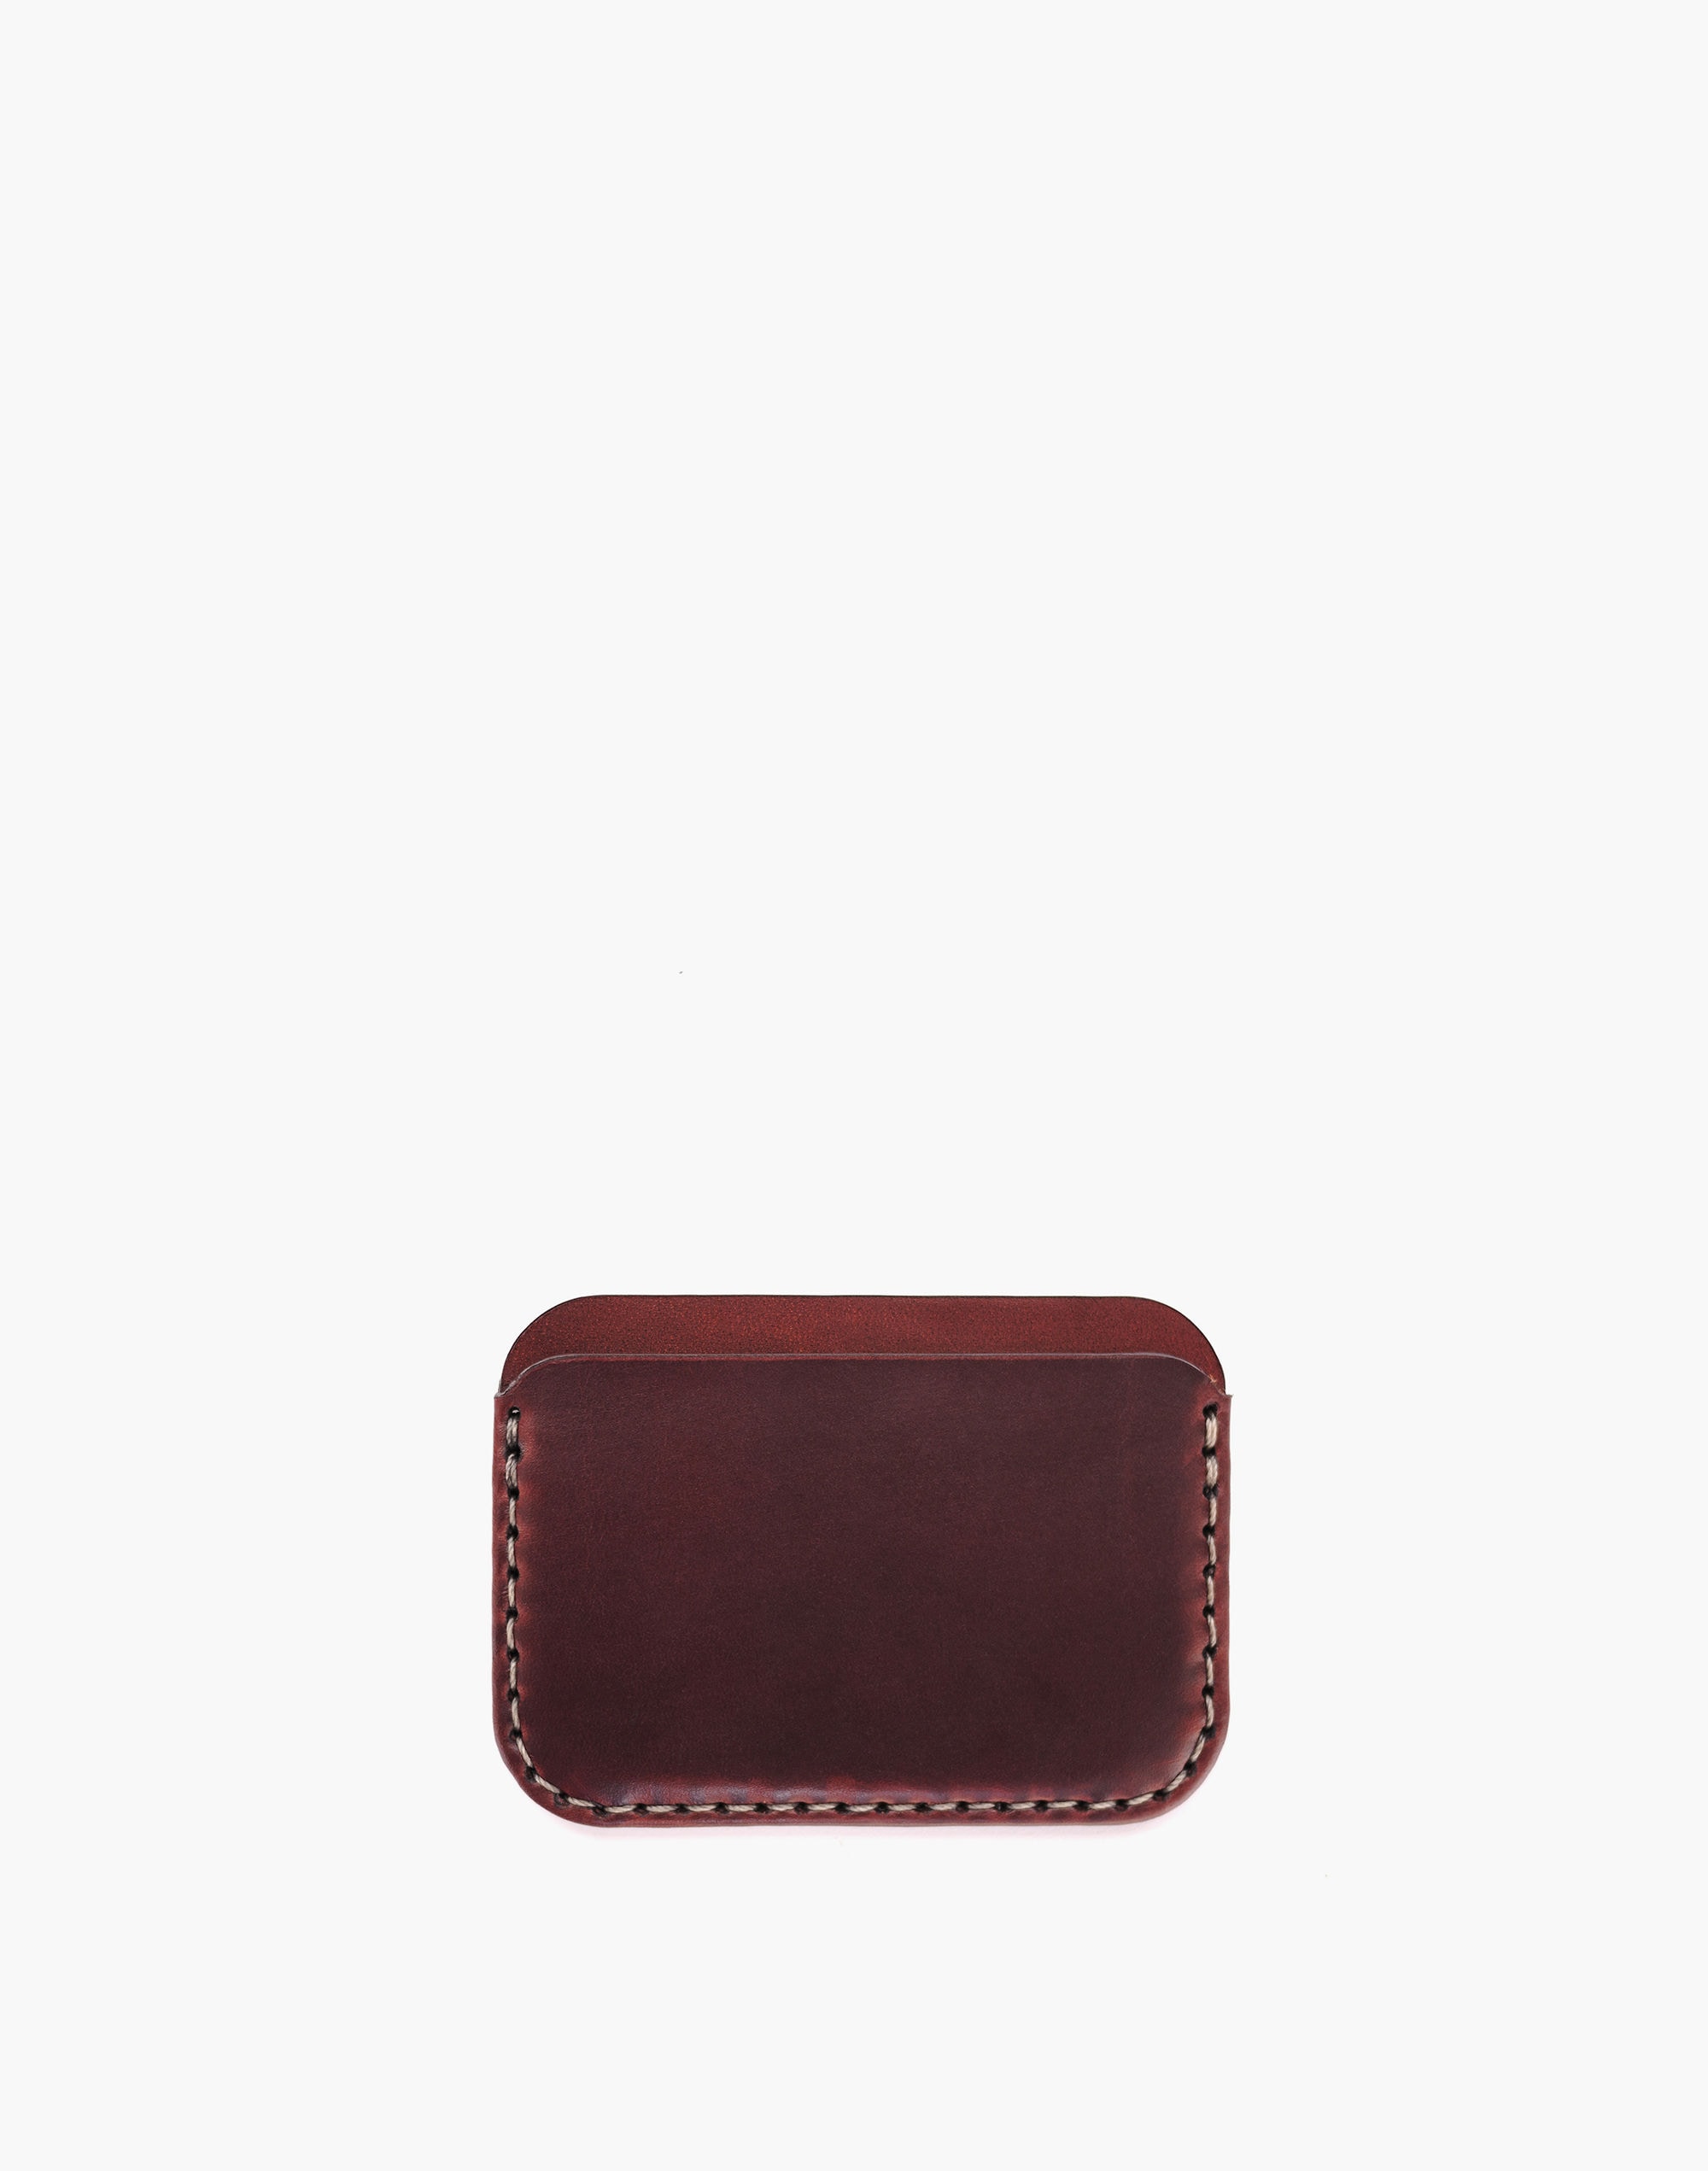 MAKR Leather Round Wallet